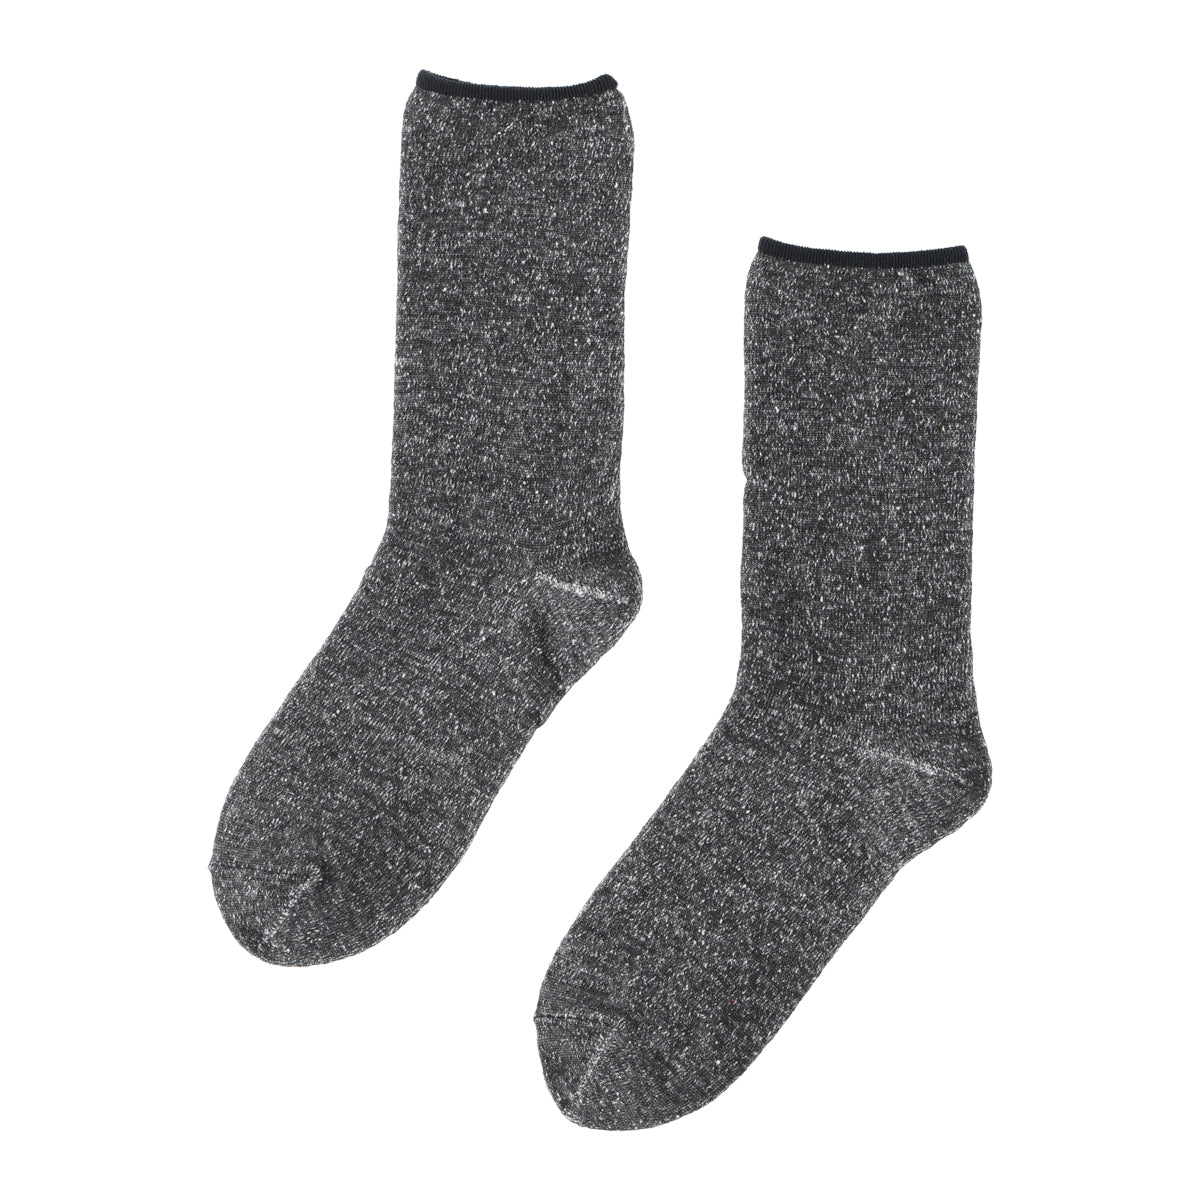 Silk and Cotton mixed socks (BLACK)